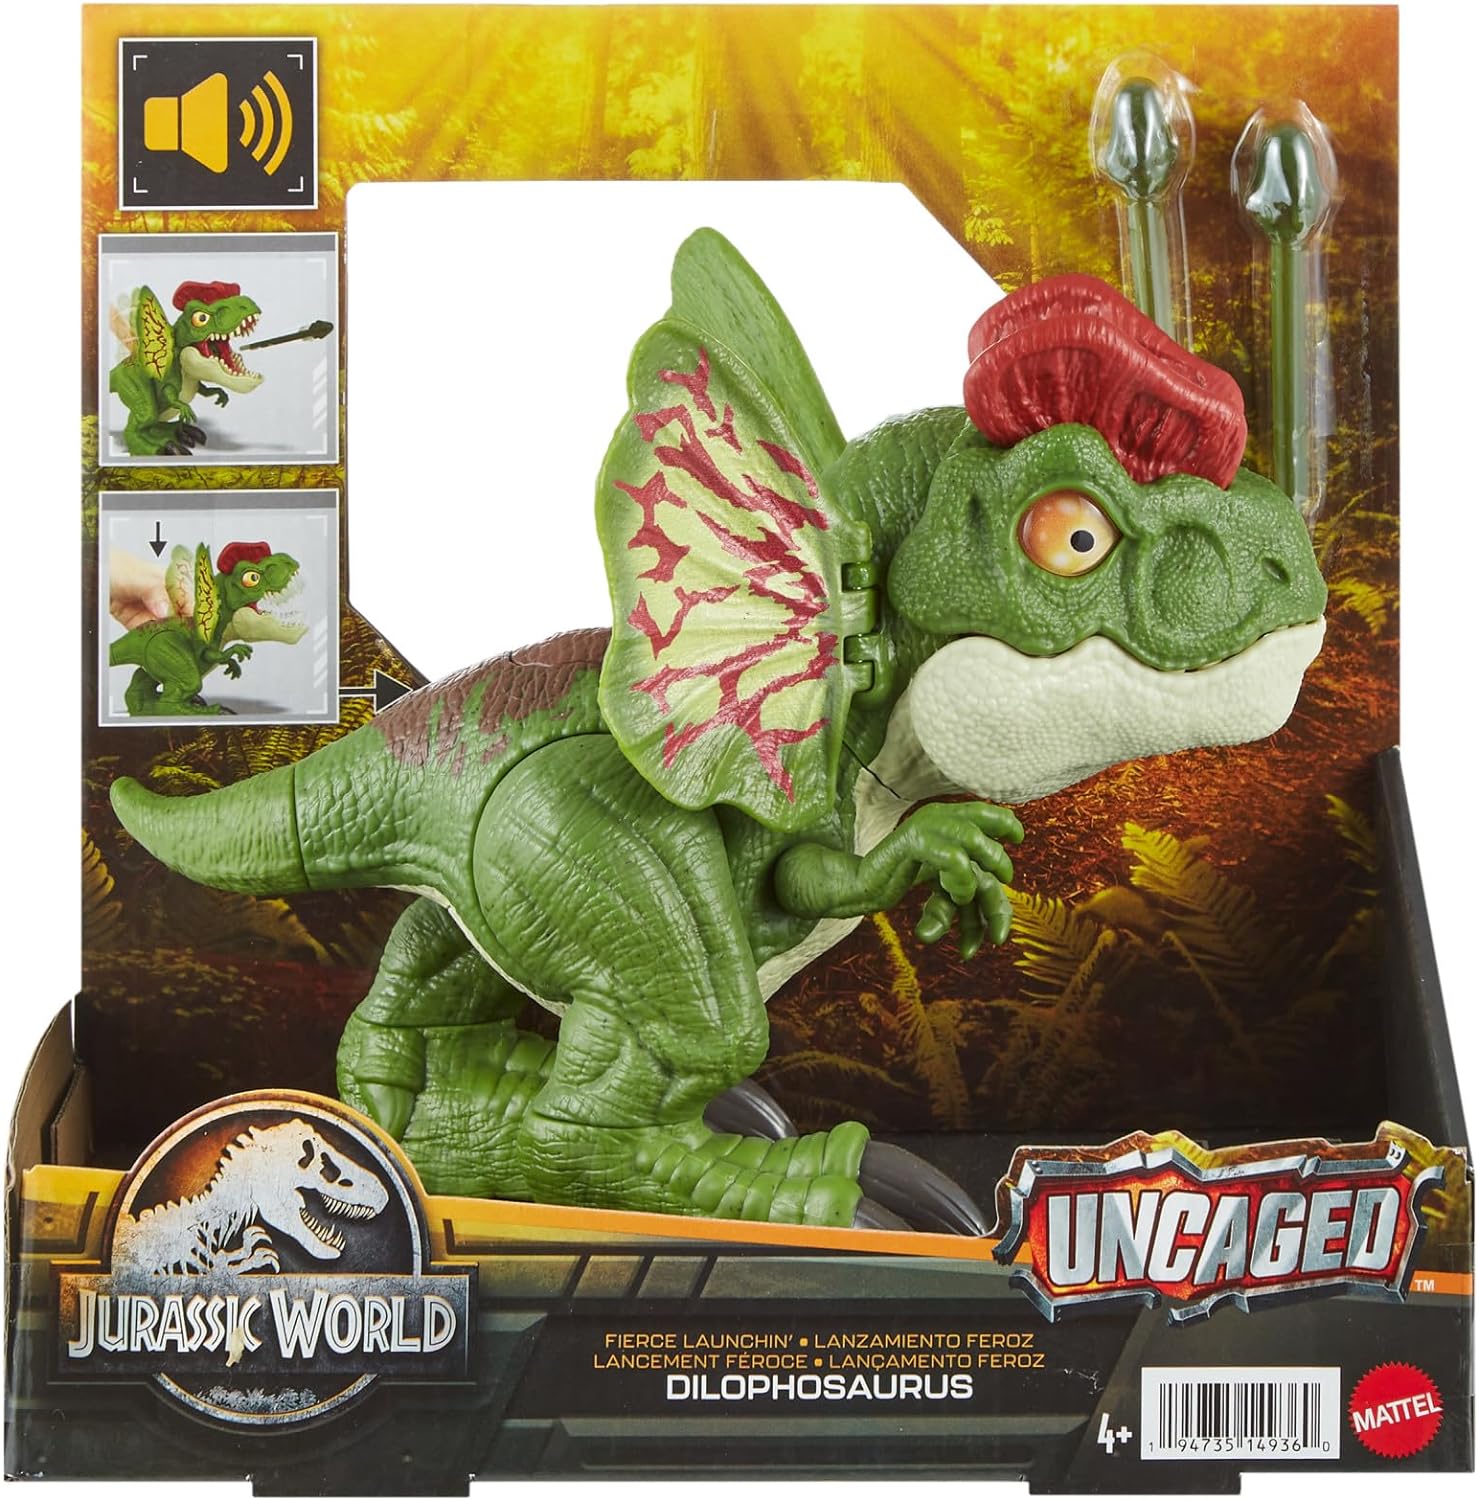 Mattel Jurassic World Toys Dinosaur Toy, Uncaged Fierce Launchin Dilophosaurus Figure with Dart Style Shooting Action, Sound, 2 Projectiles